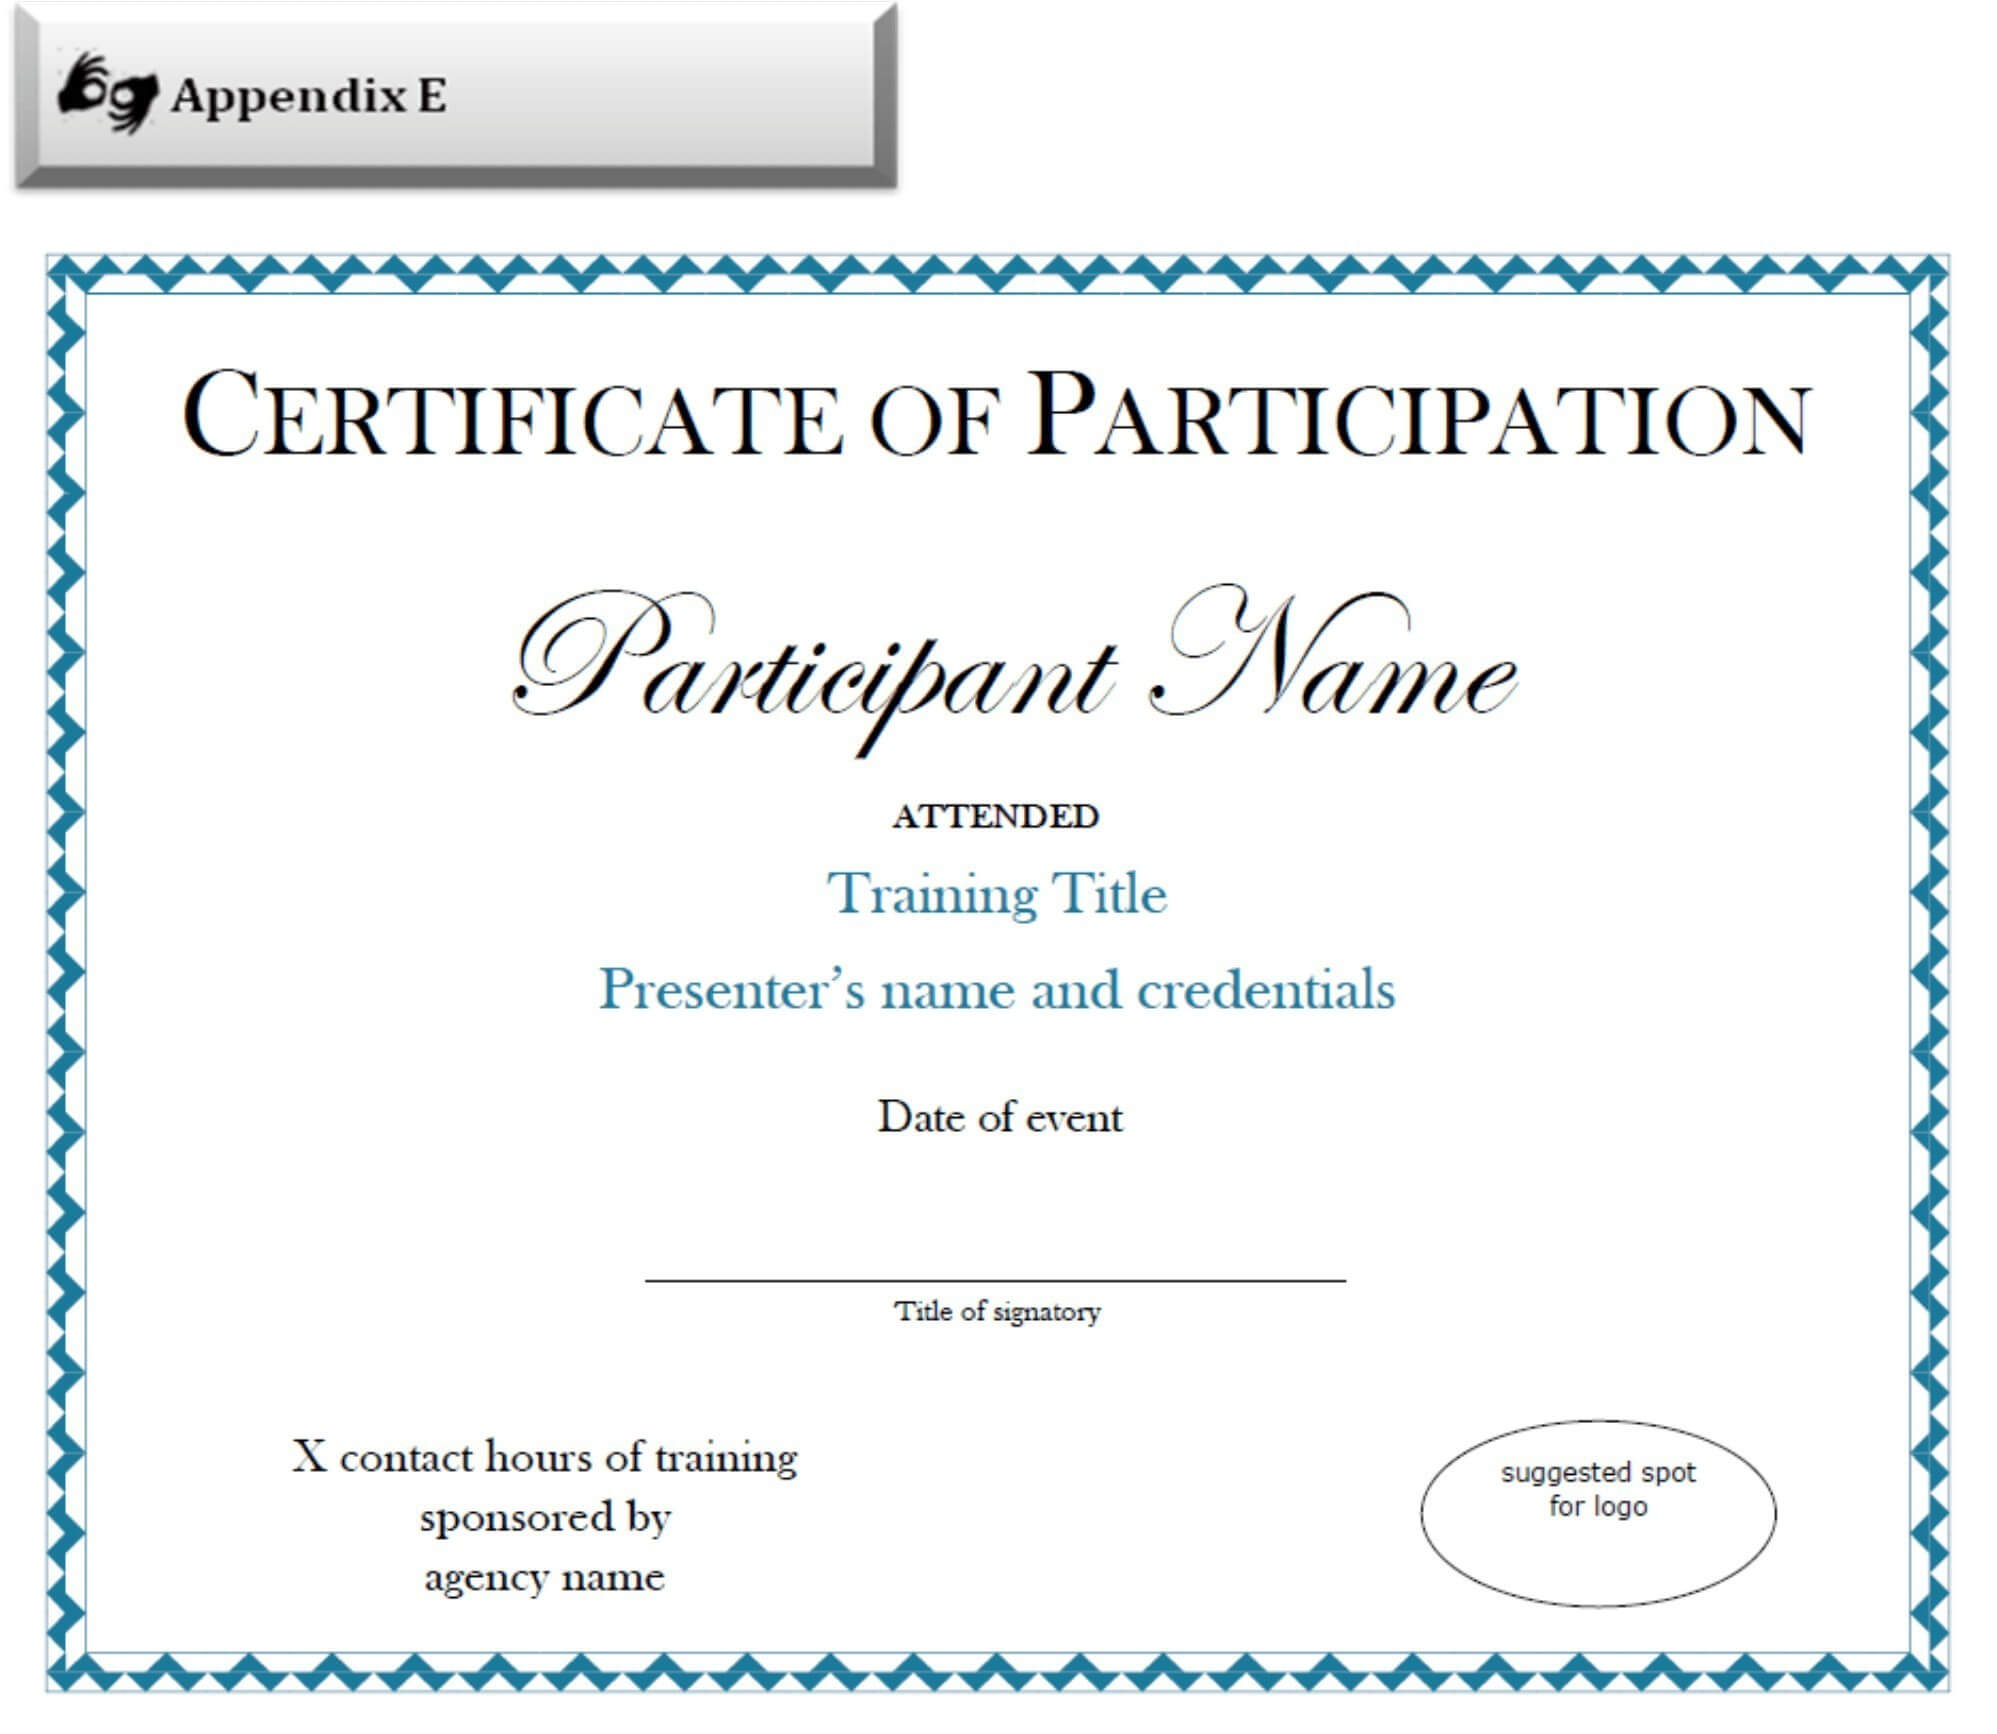 Brilliant Ideas For Conference Participation Certificate Regarding Conference Participation Certificate Template